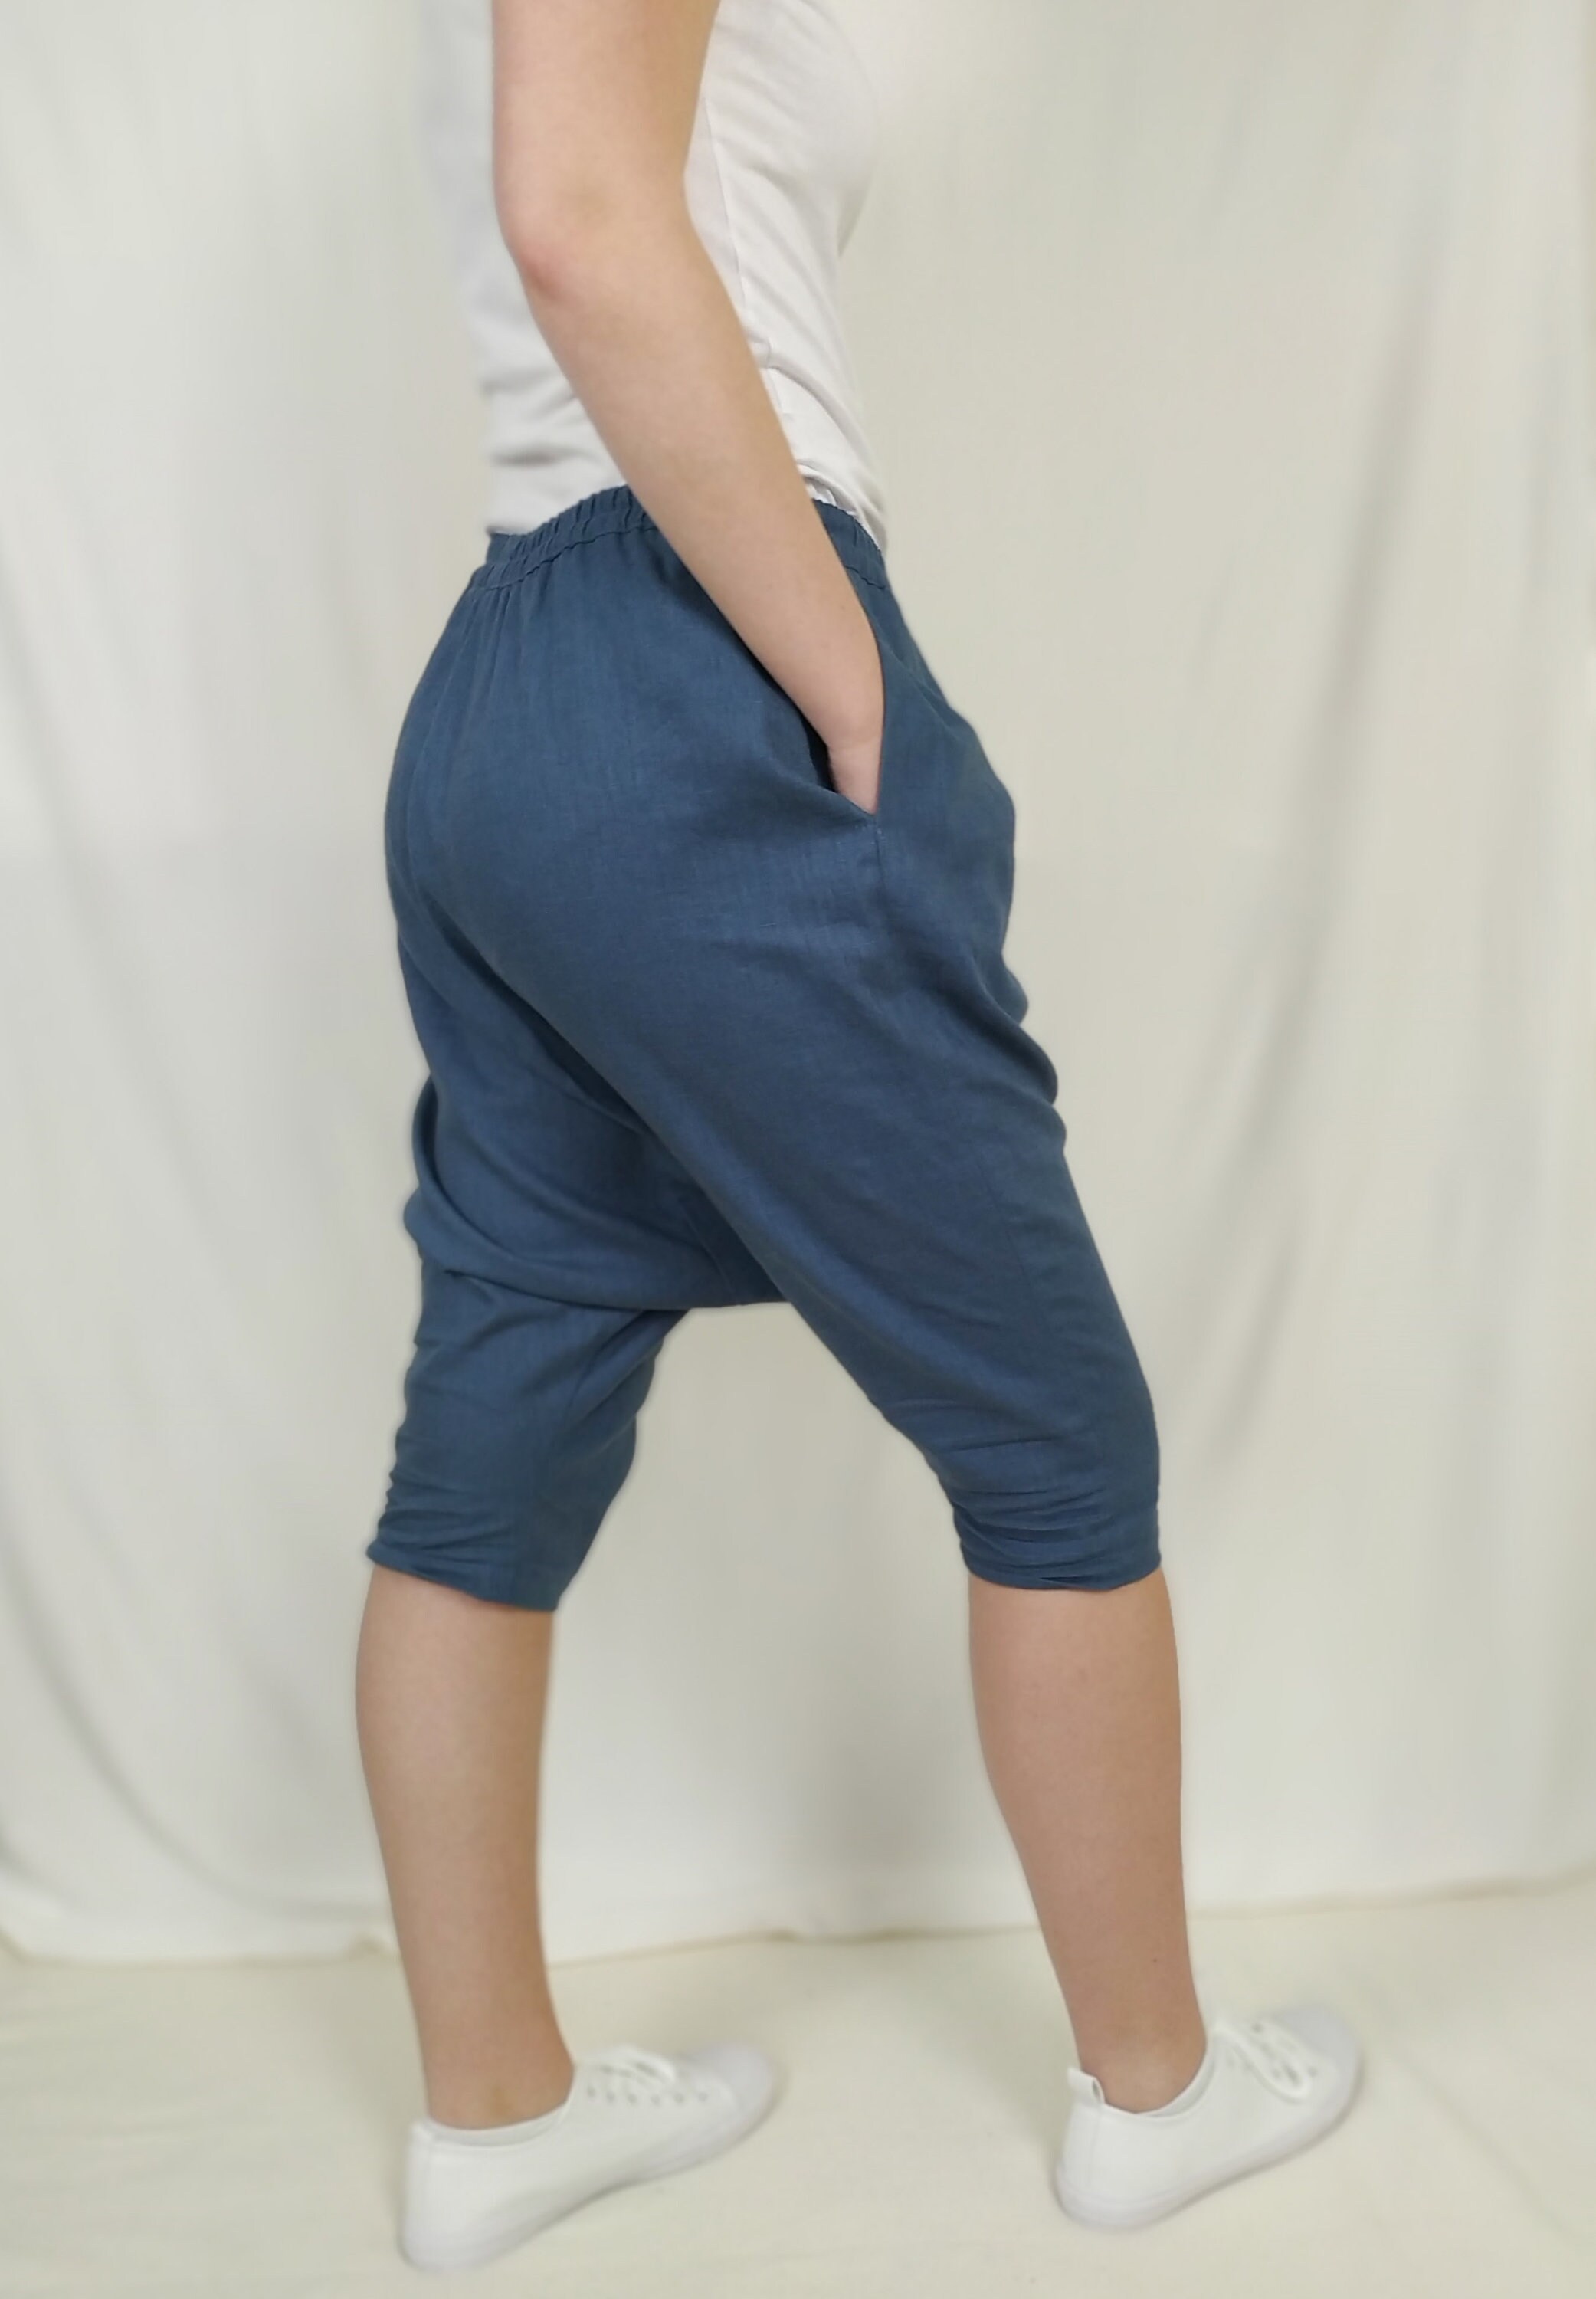 Harem Pants Sewing Pattern Crotch - Israel